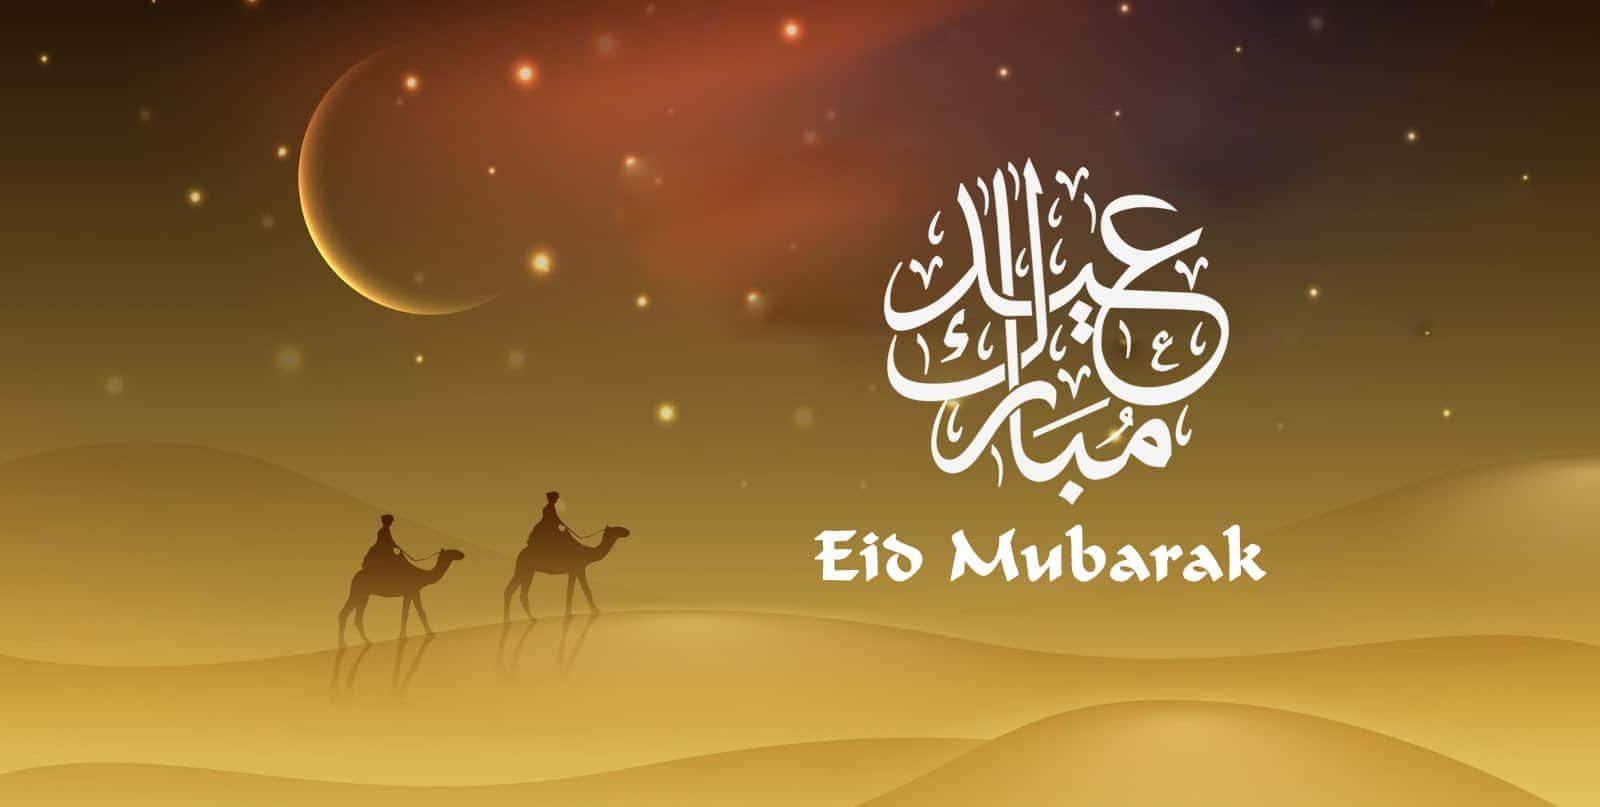 Auguroa Tutti Un Felice Eid Mubarak!